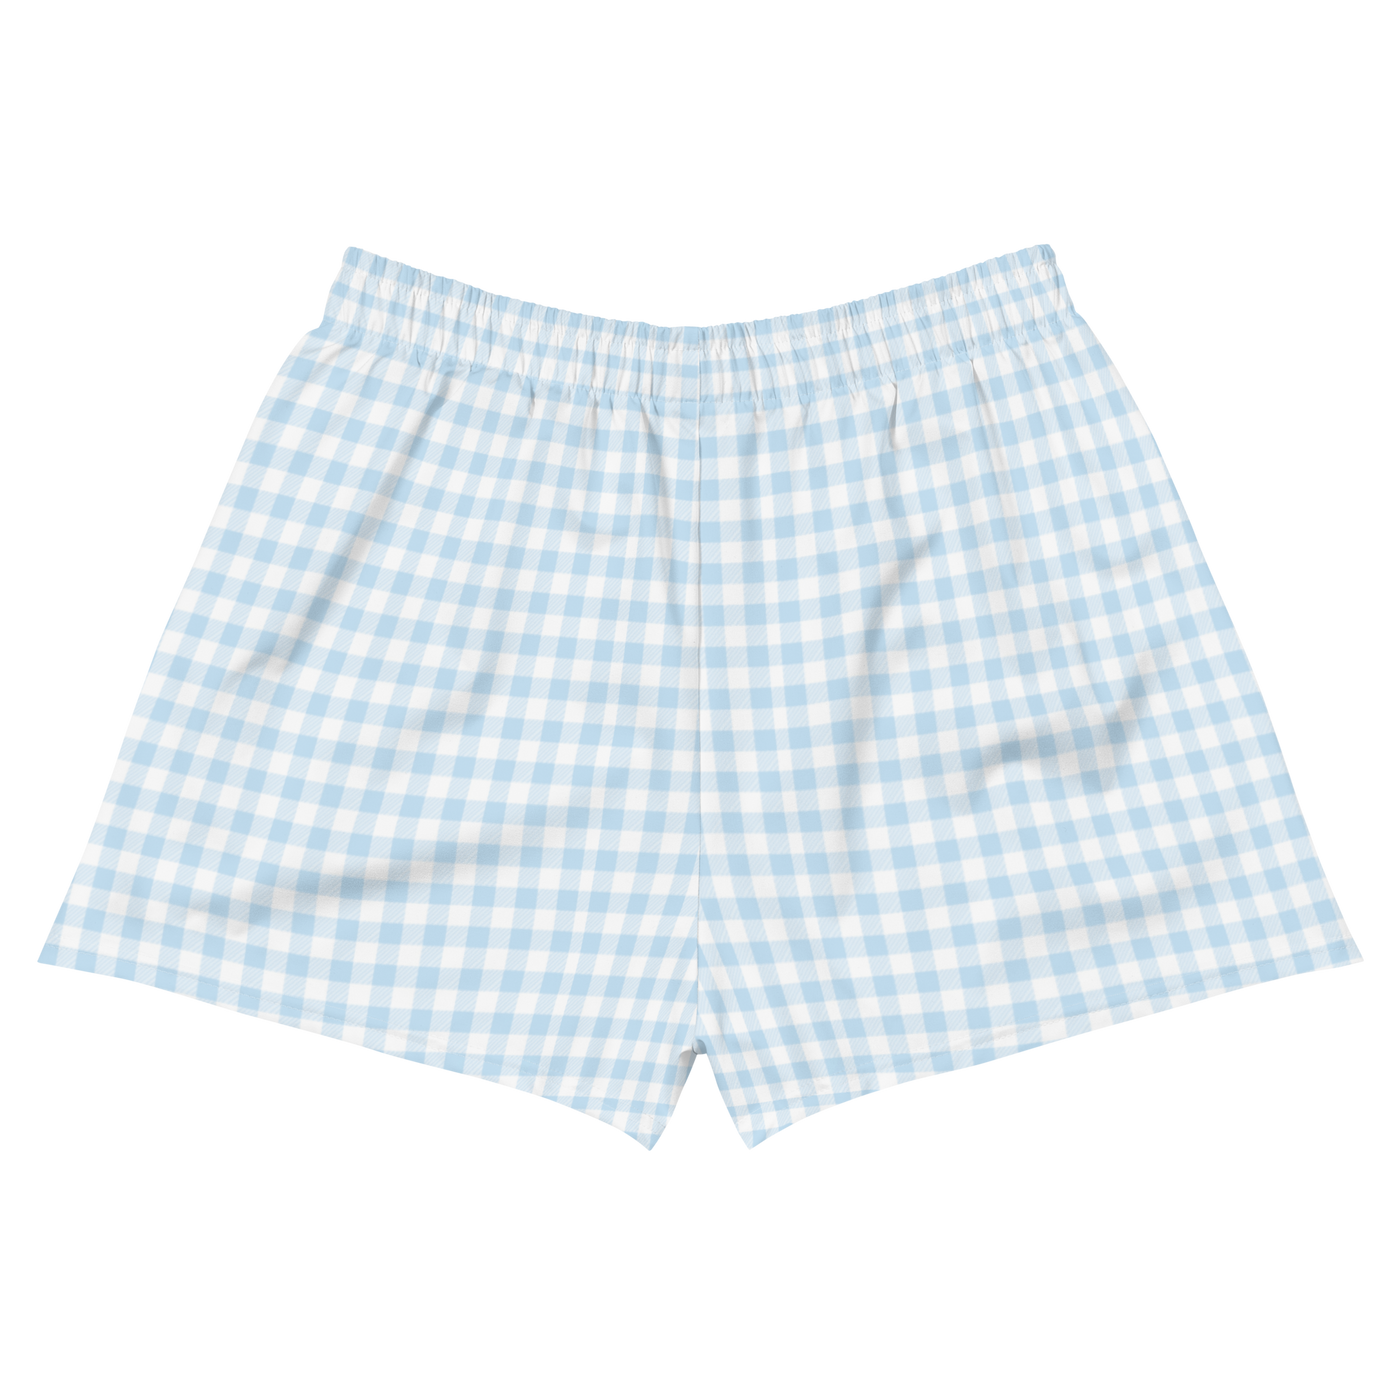 'Blue Gingham' Women’s Athletic Shorts